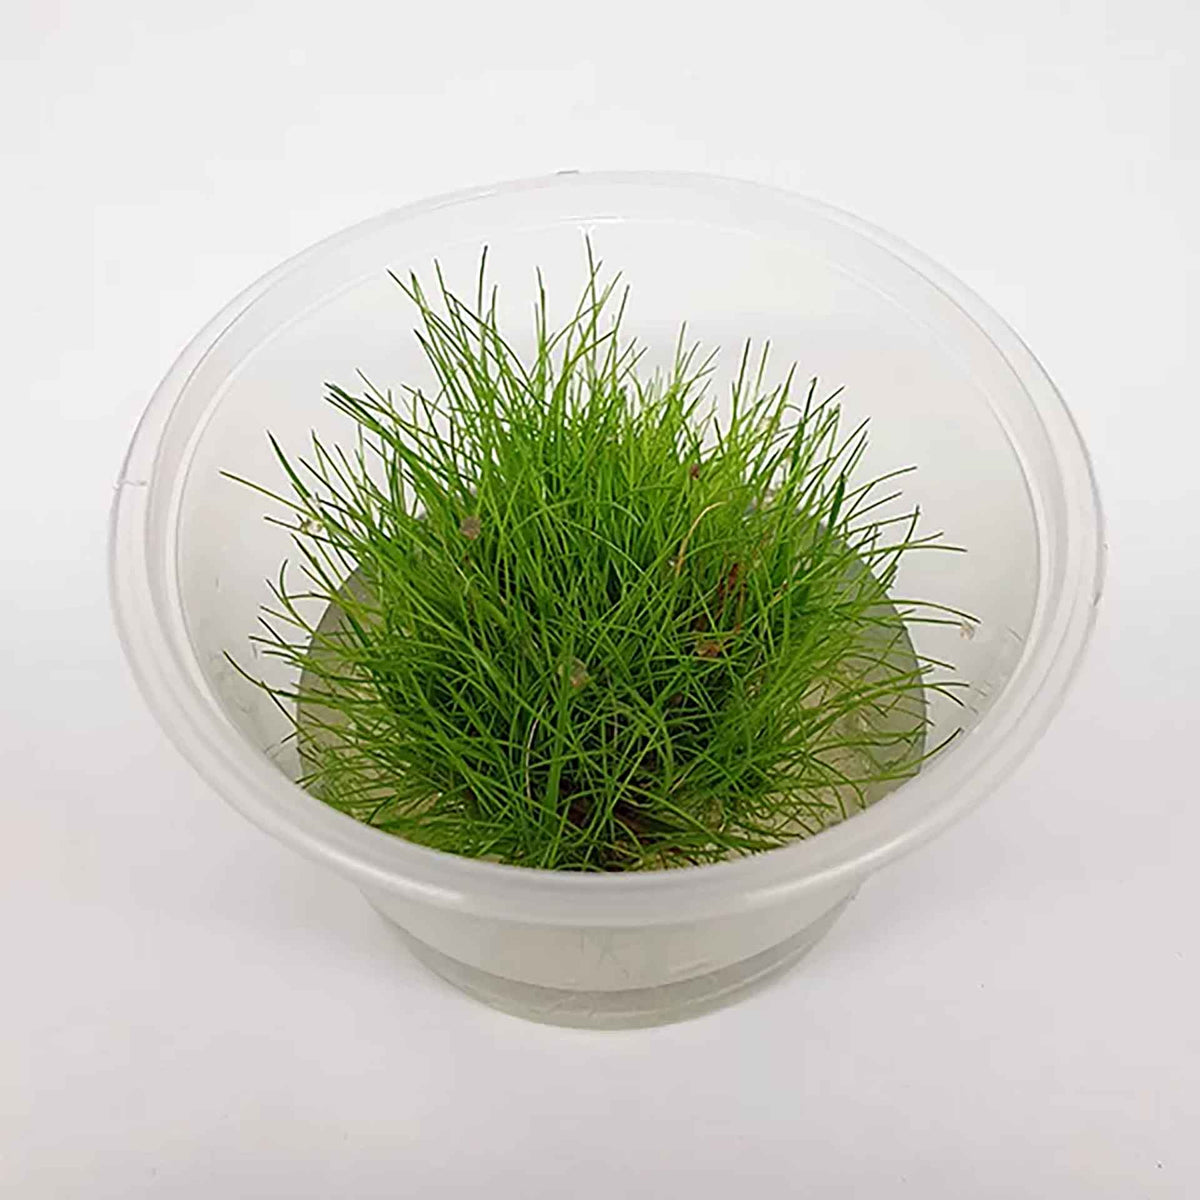 Eleocharis acicularis ‘Dwarf Hair Grass’ Live Plant - Tissue Culture